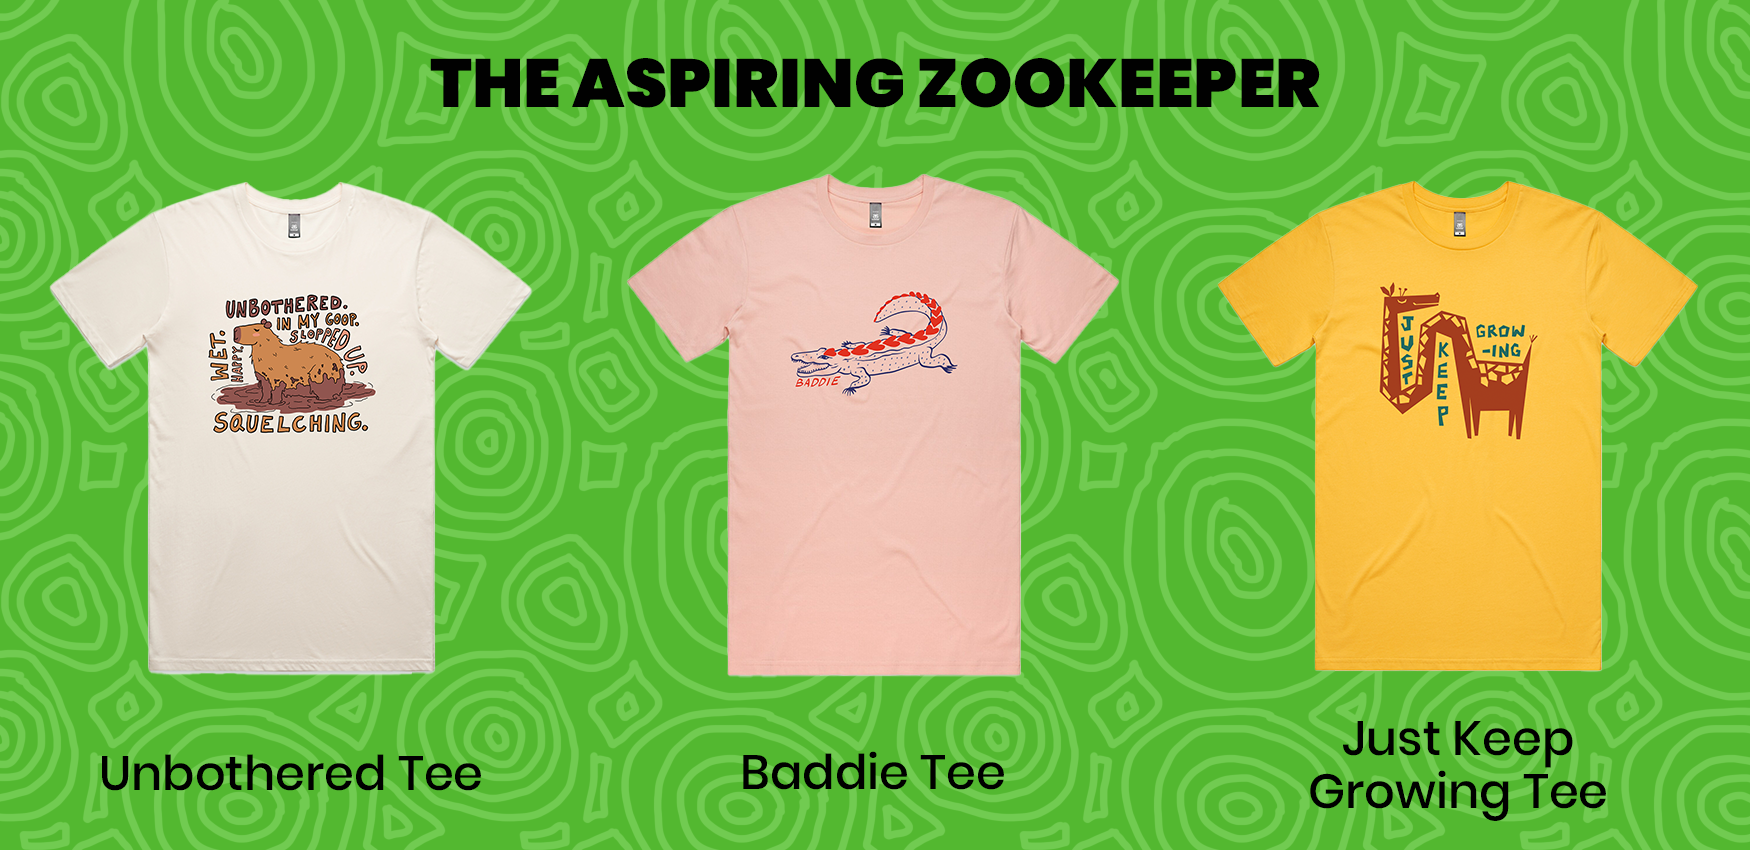 The Aspiring Zookeeper